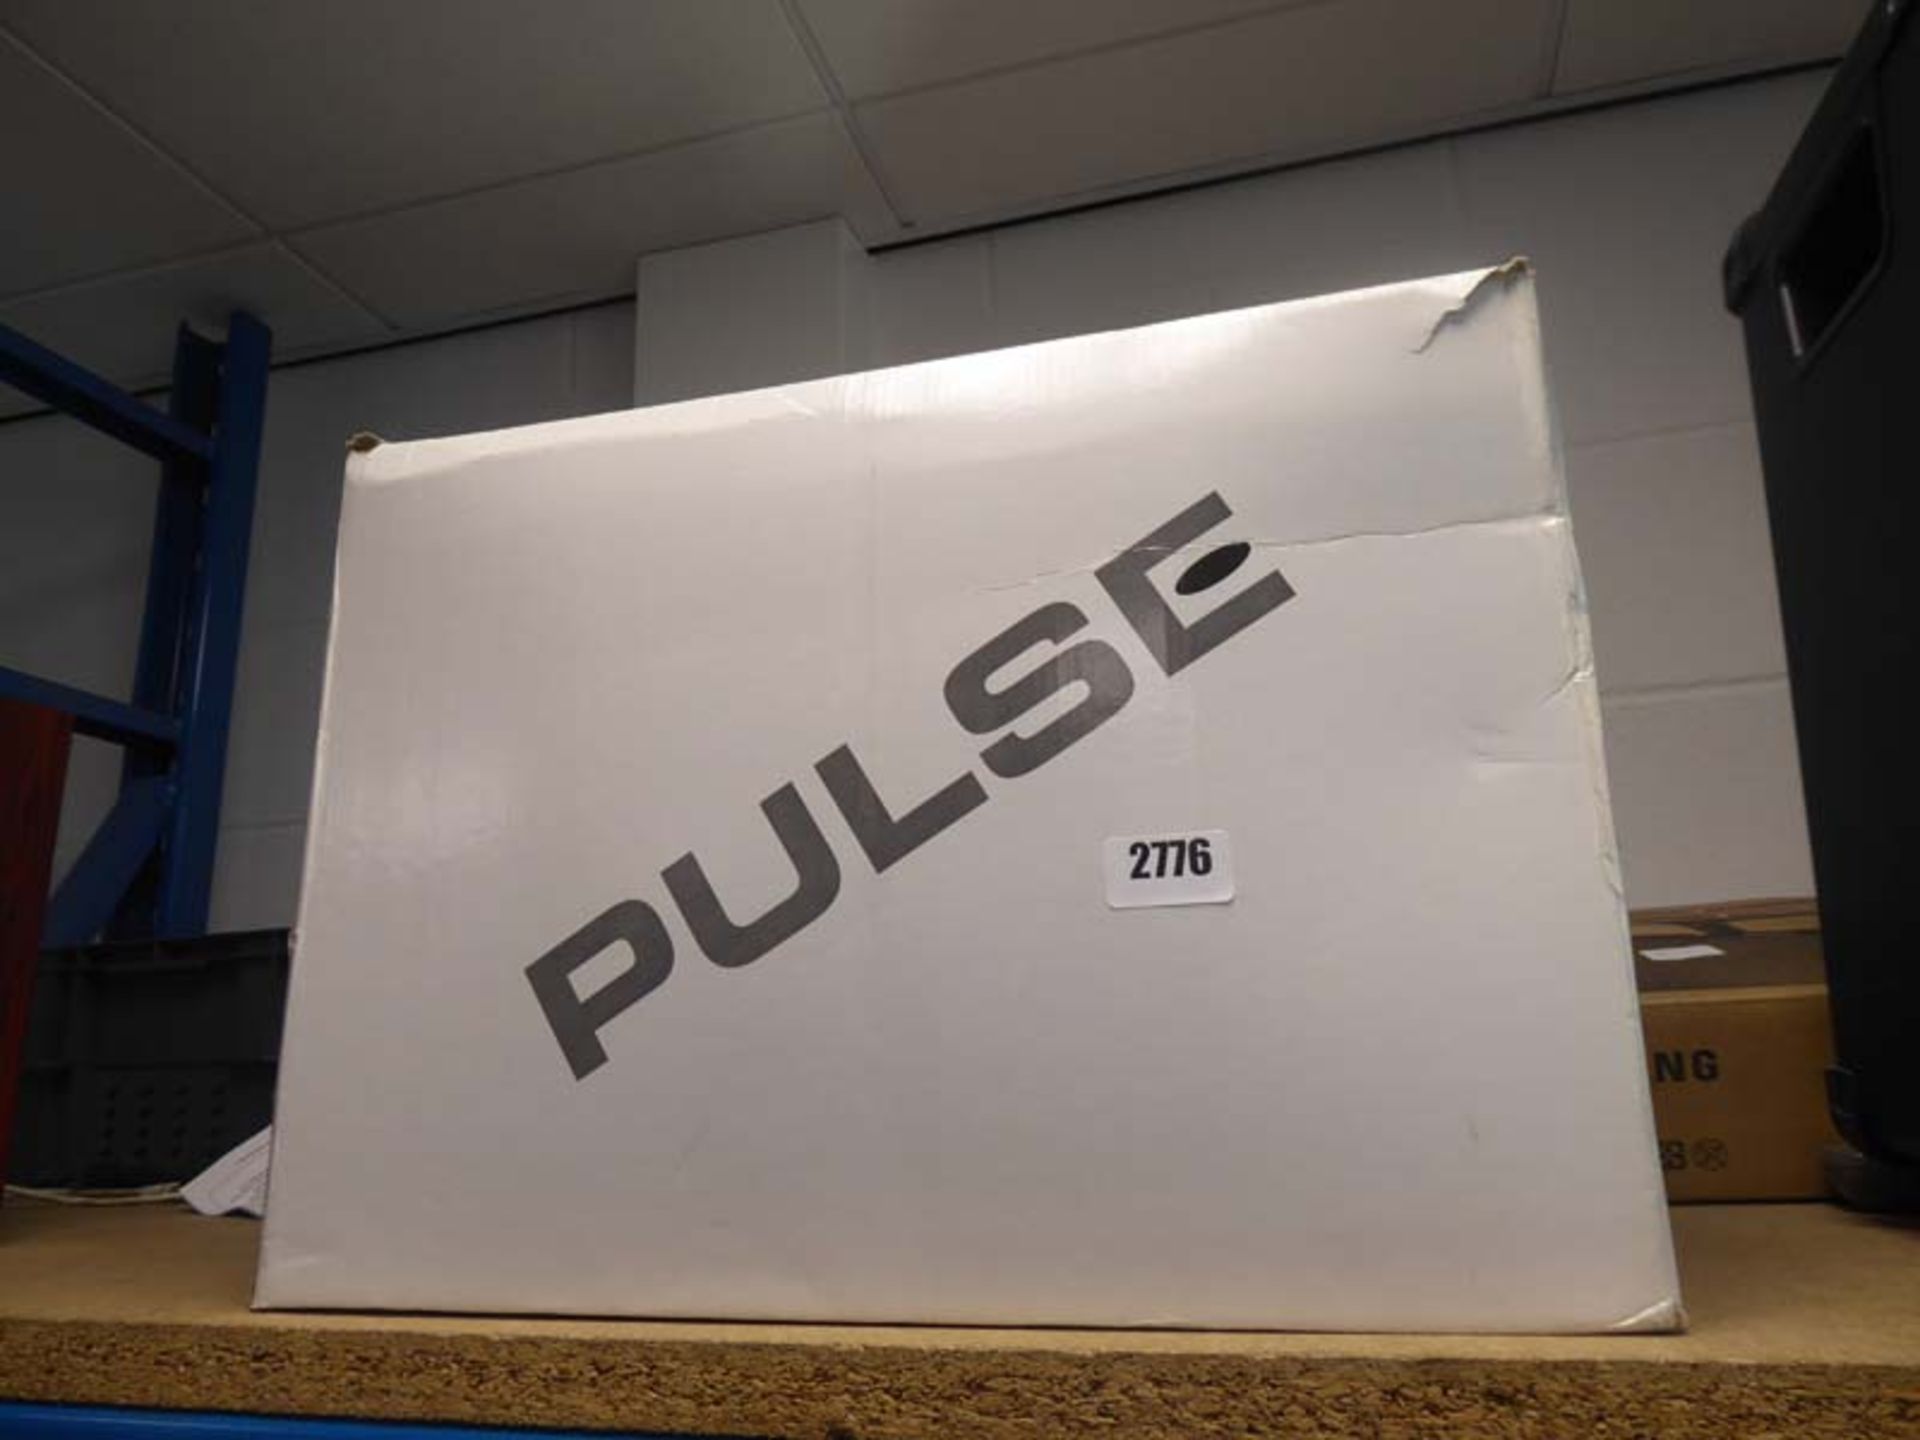 Pulse stereo speaker set in box